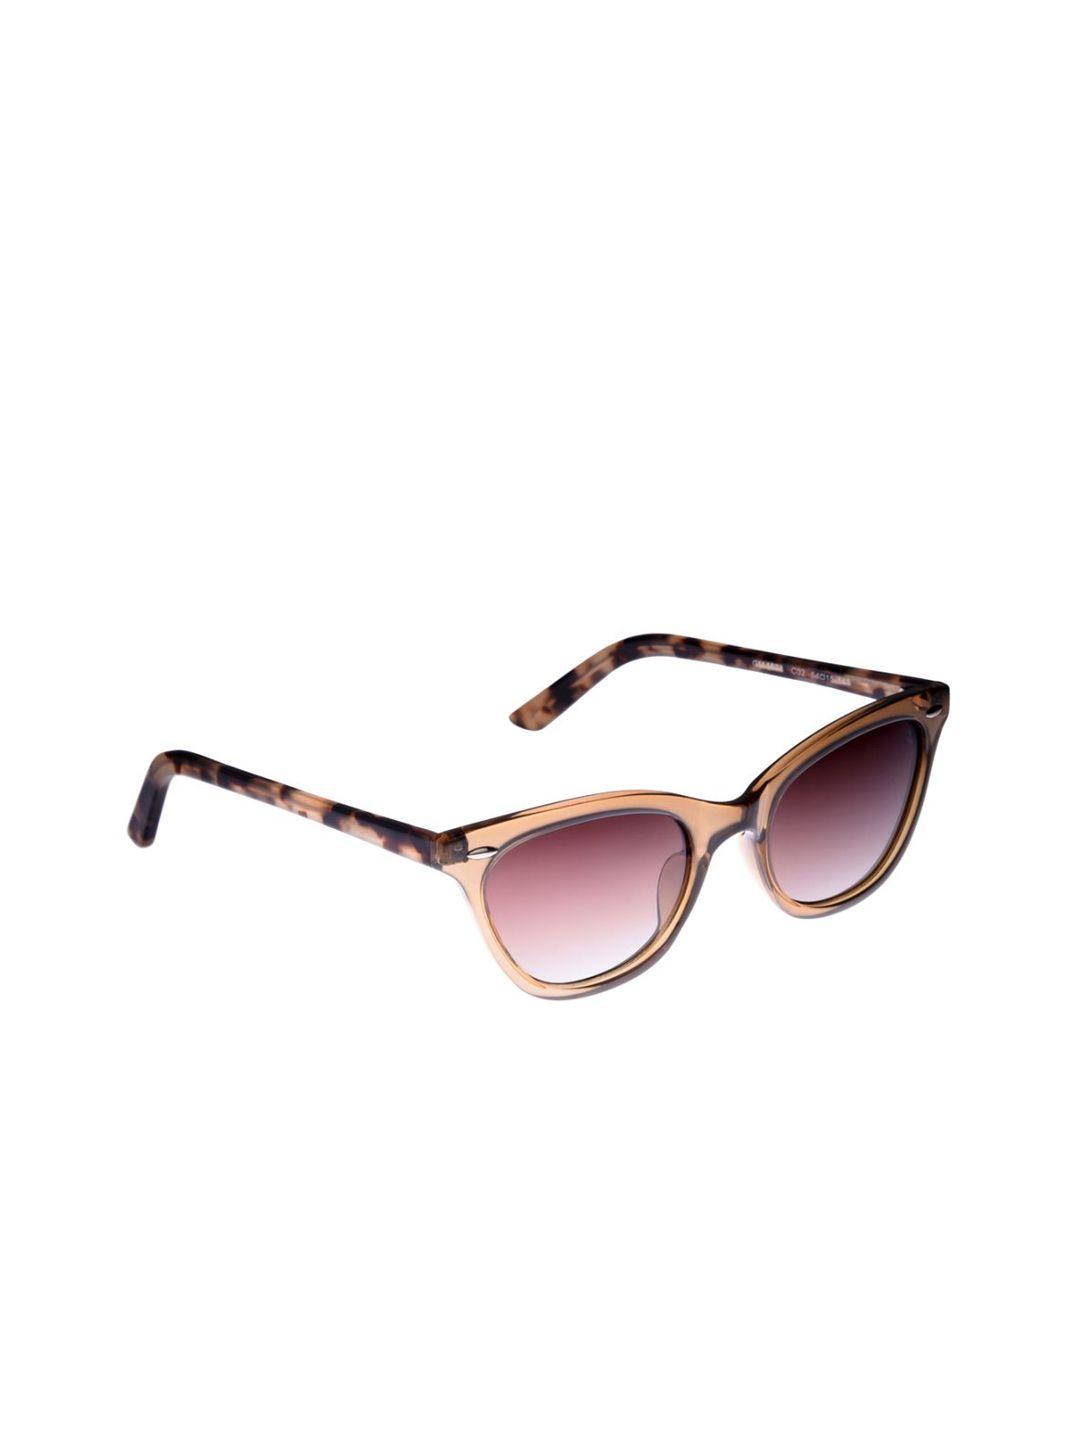 gio collection unisex purple cateye sunglasses gm1024c02